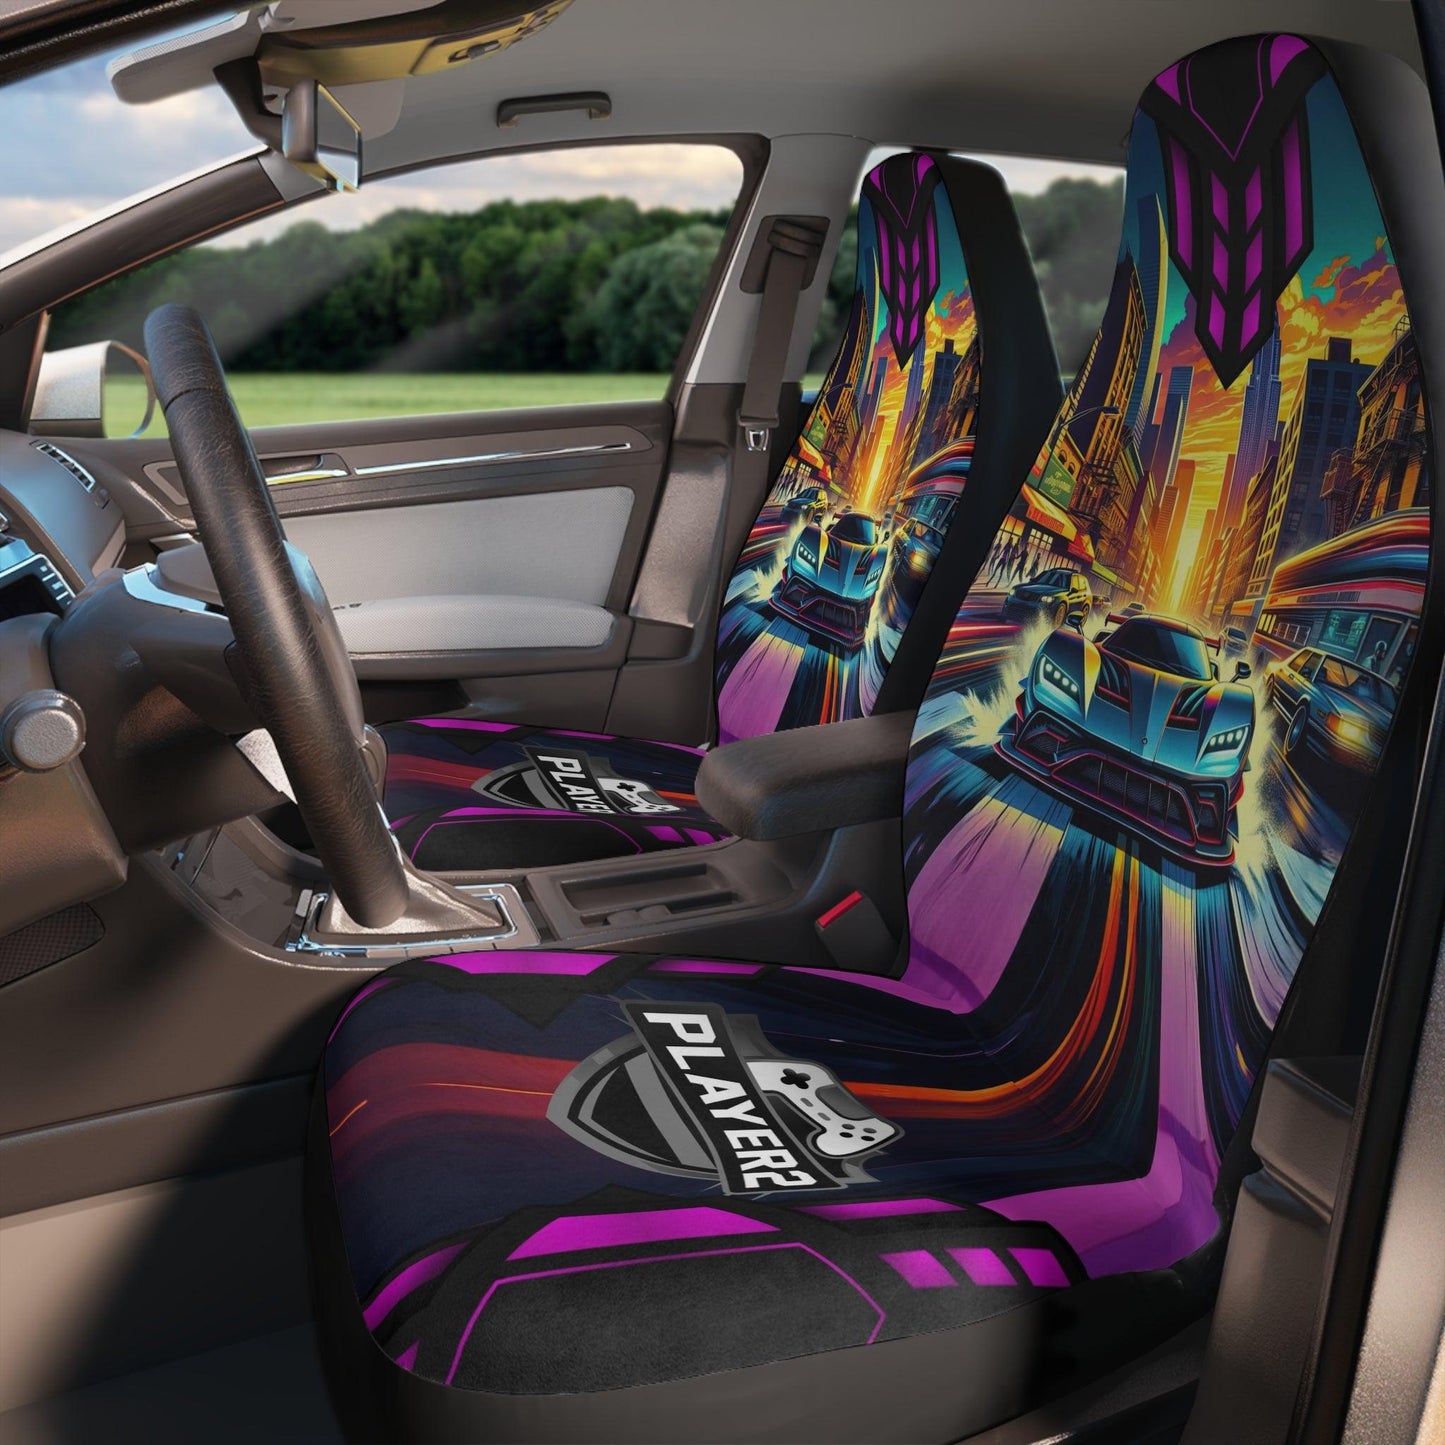 GTA Car Seat Covers - Ultimate Game Wear